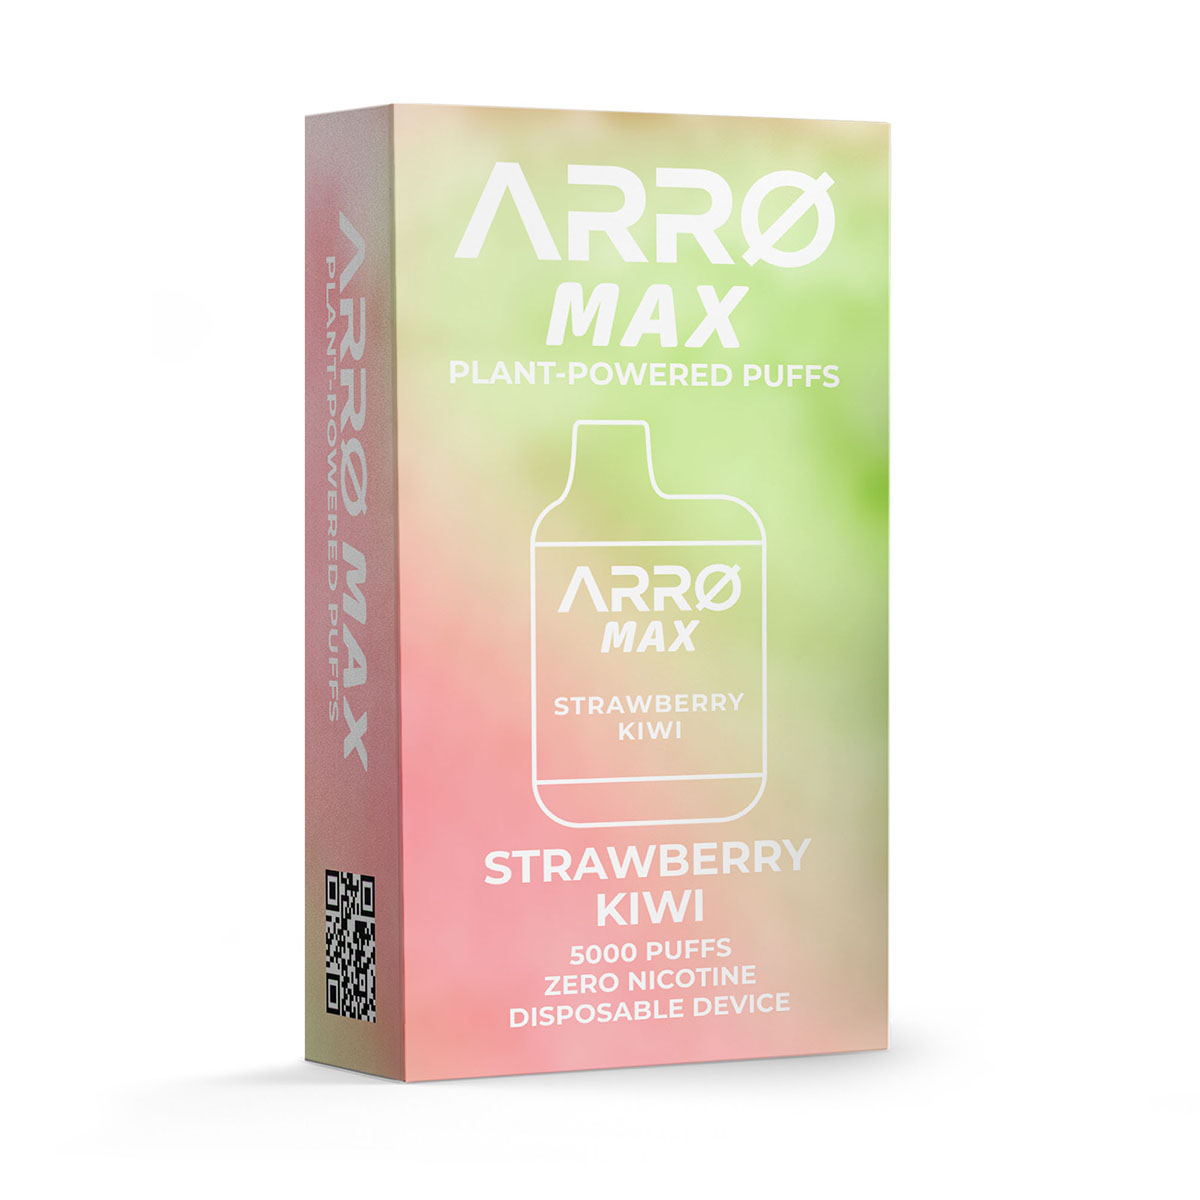 Arro Max Disposable Vape in Strawberry Kiwi flavor